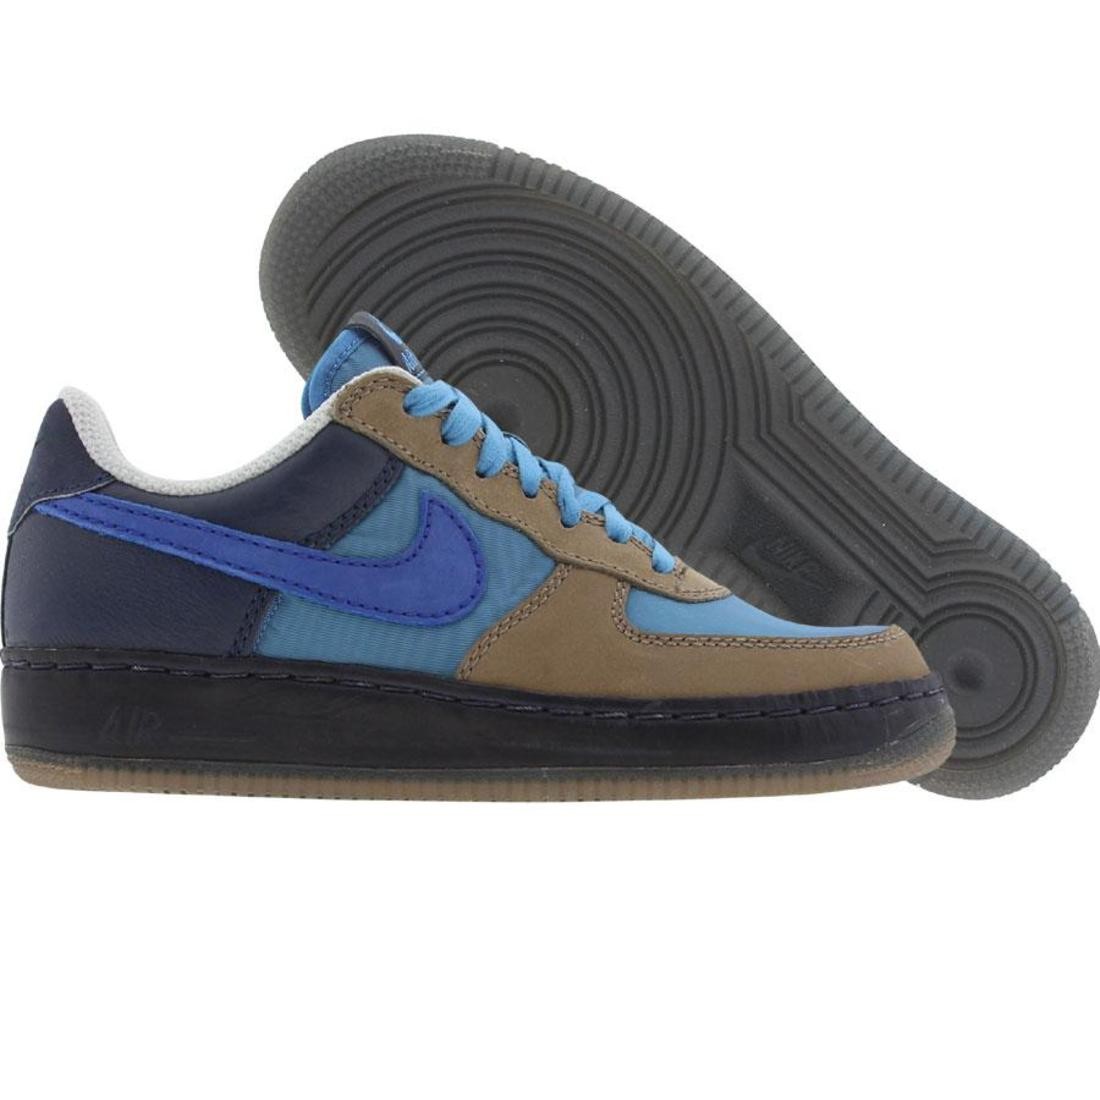 Nike Air Force 1 Low Insideout Premium Stash Edition (harbor blue / sport royal / soft grey)